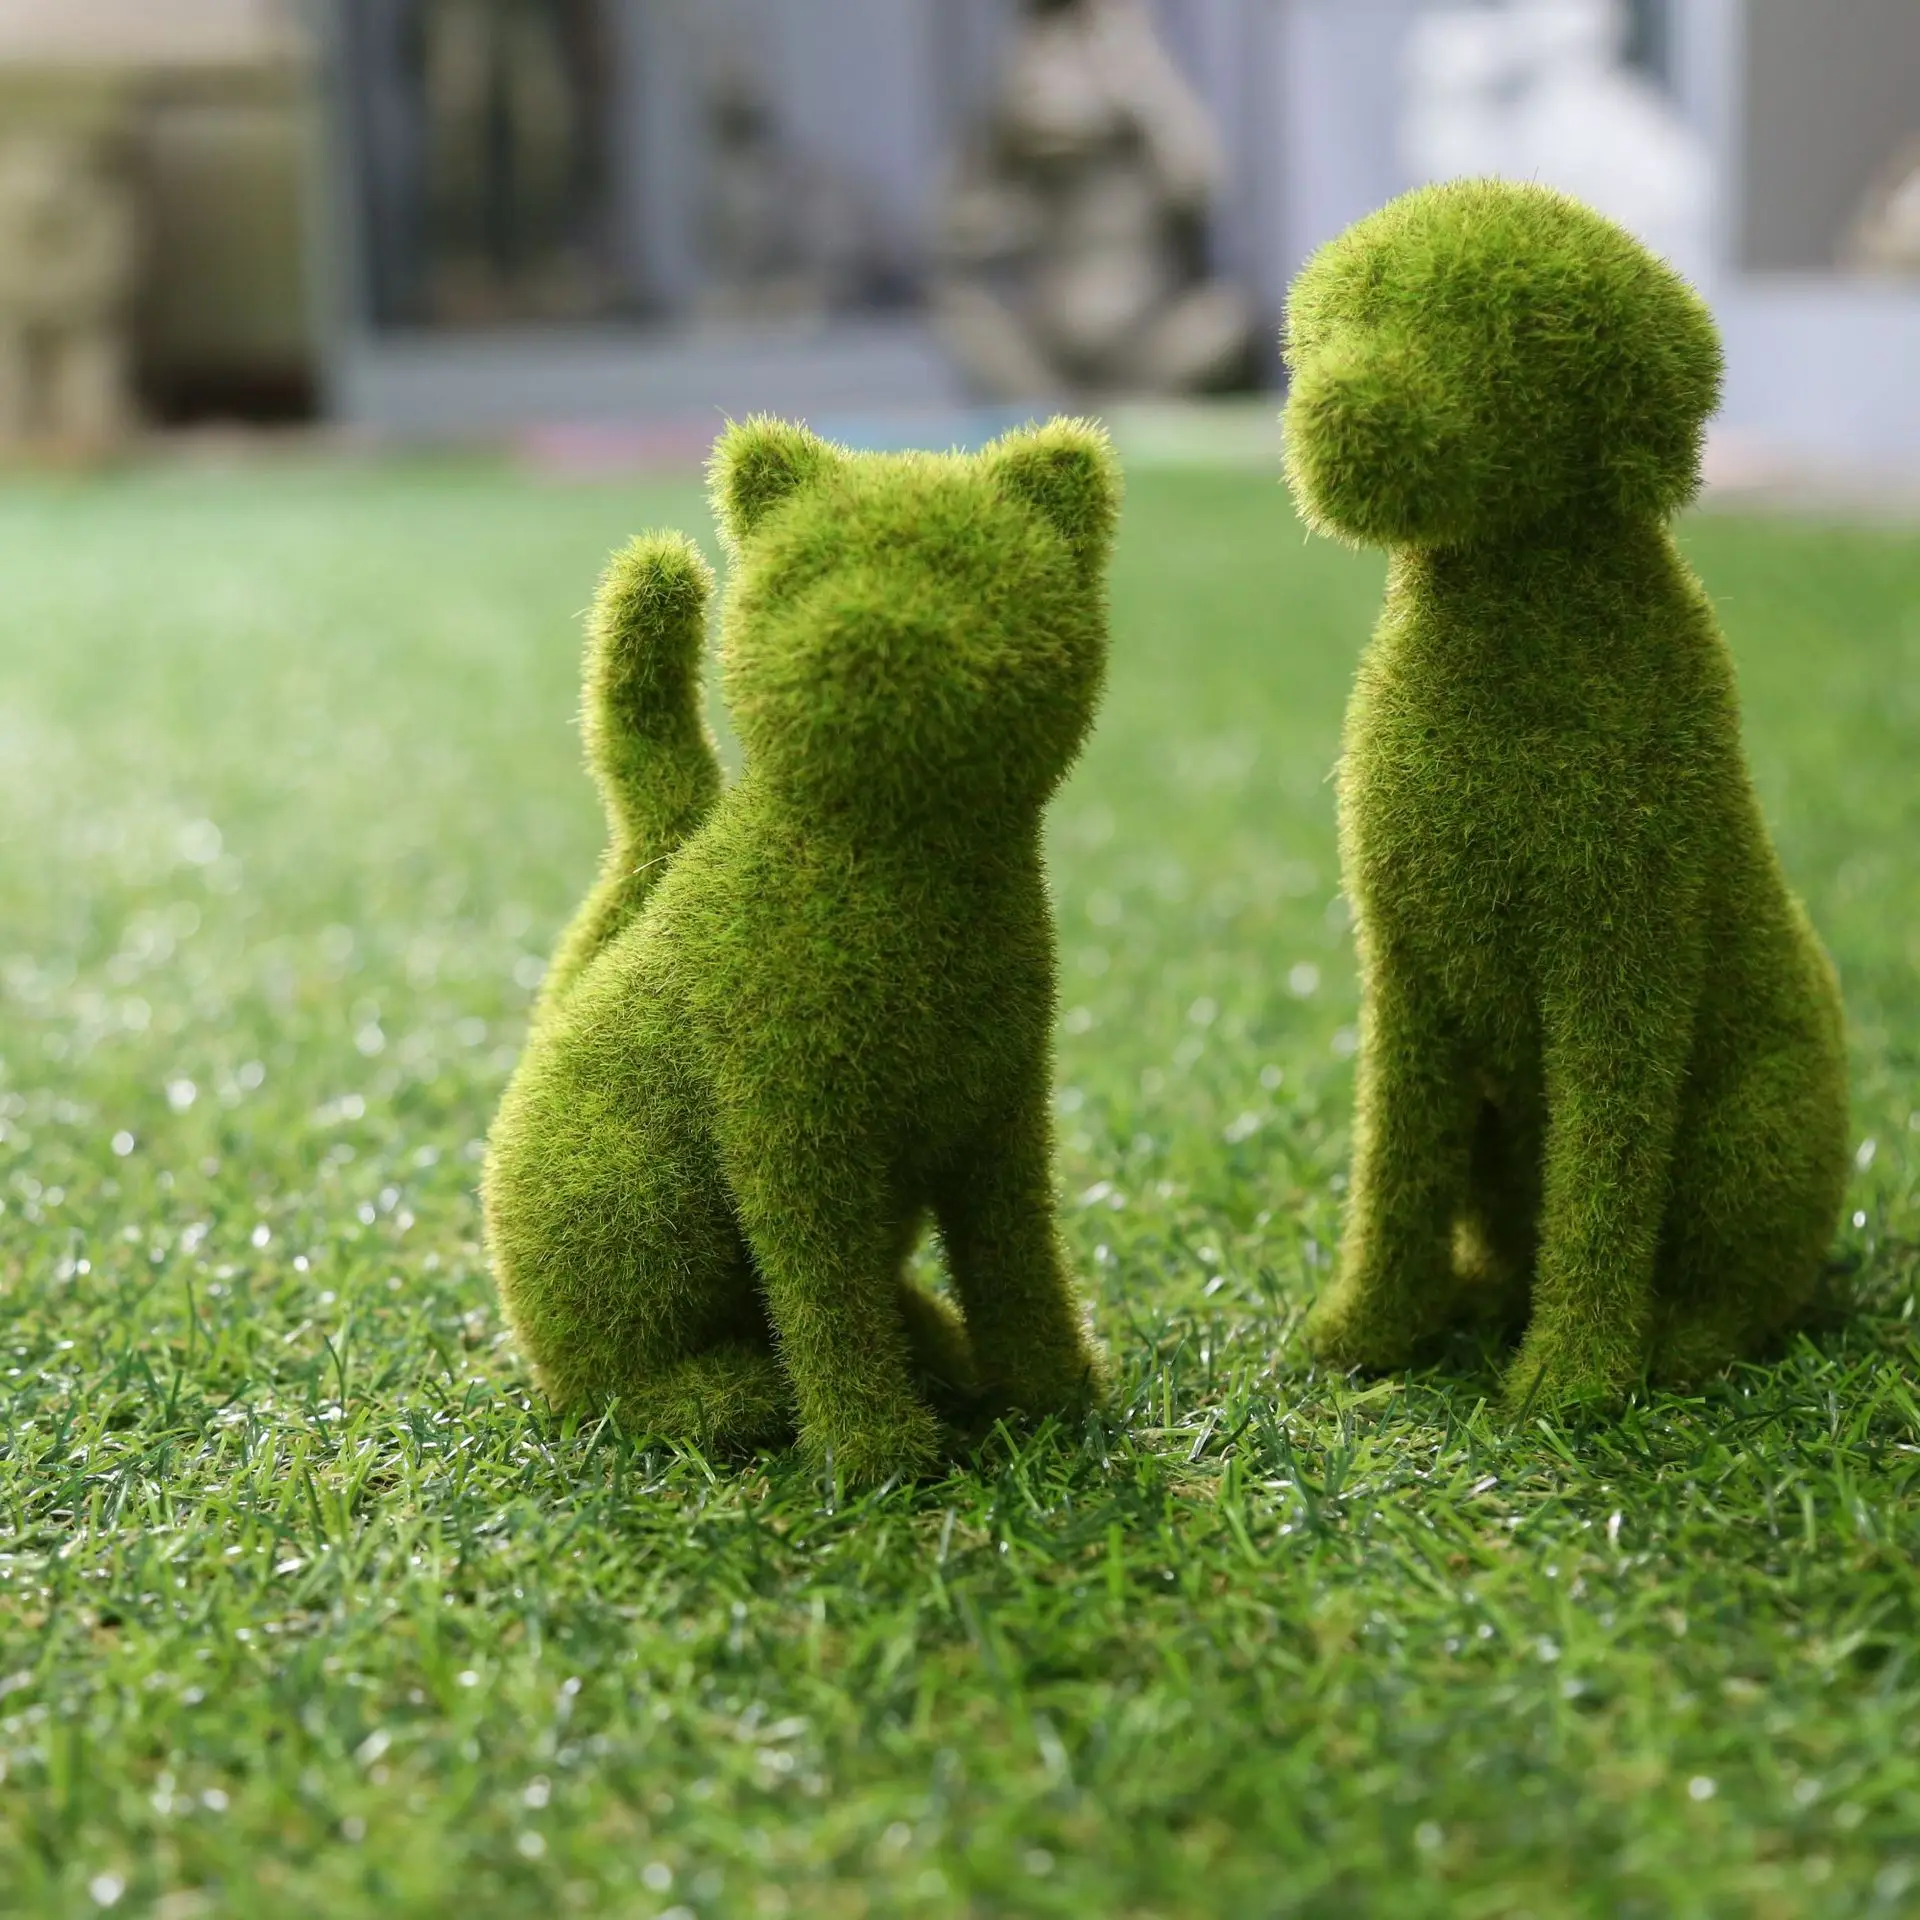 

Outdoor Courtyard Cute Dog Statues Grass Green Simulation Flocking Puppy Ornaments Moss Grass Puppy Figurines Garden Decor